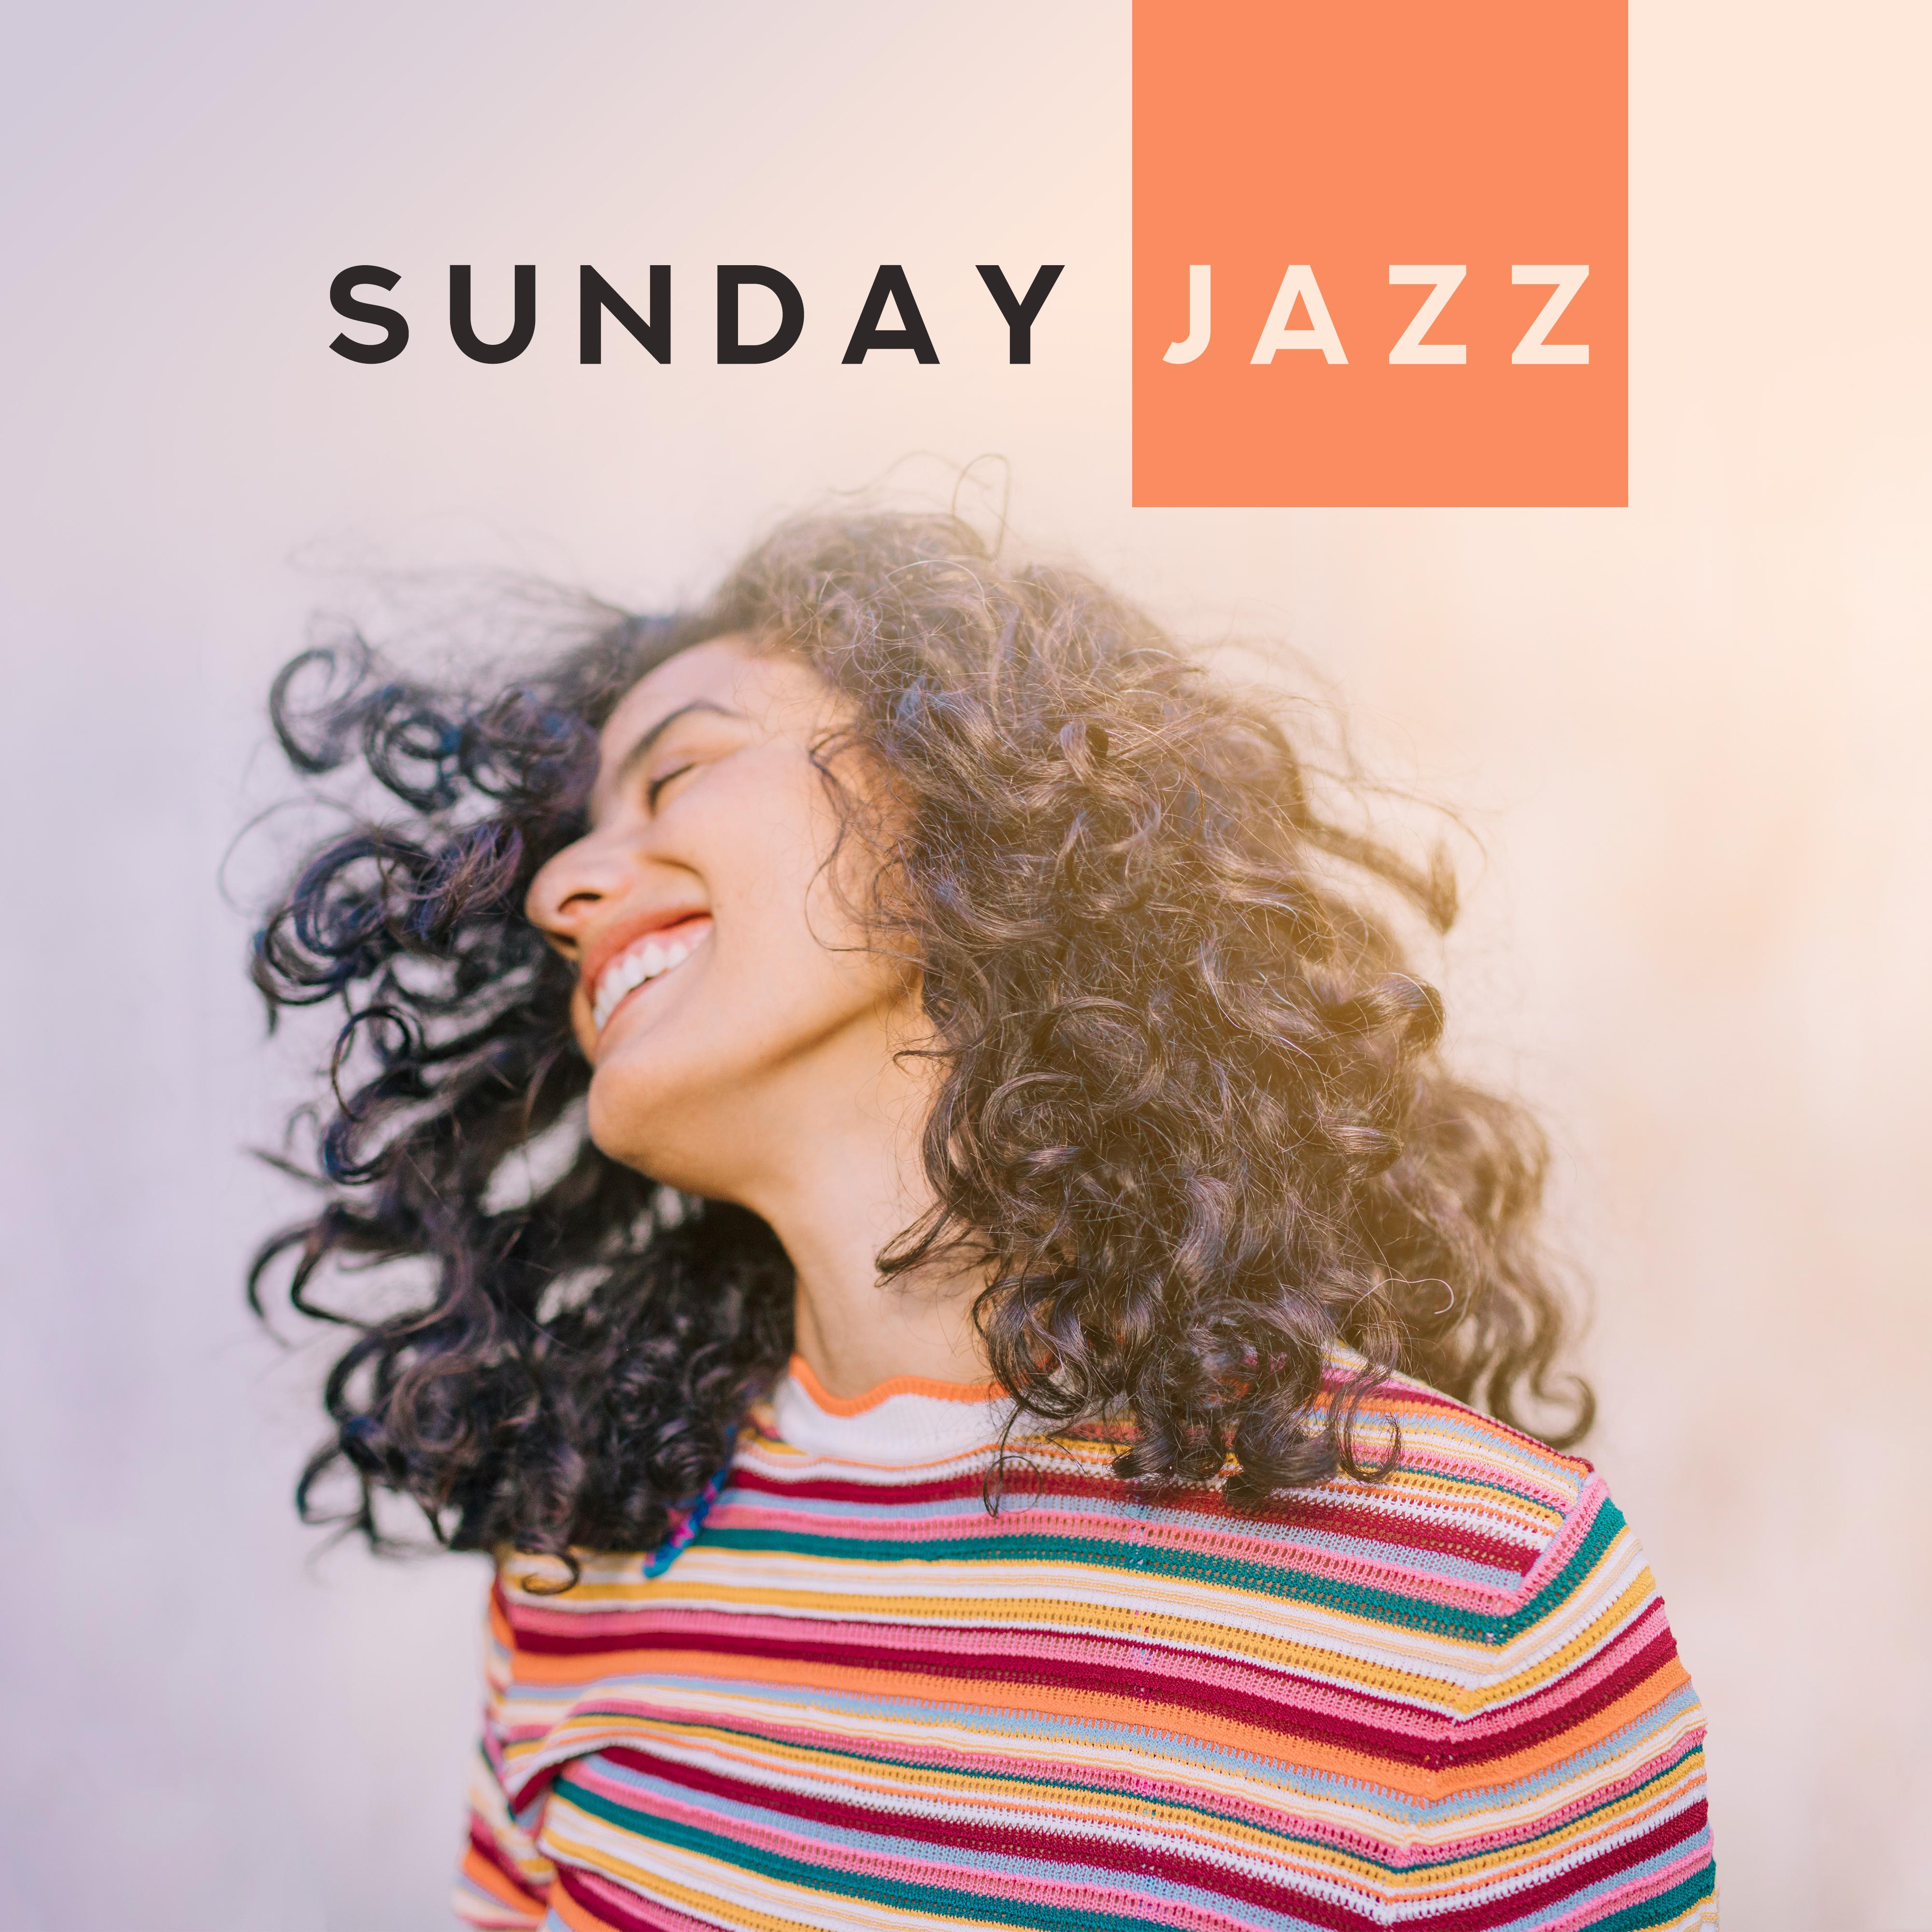 Sunday Jazz – Instrumental Songs Reduce Stress, Smooth Jazz for Sleep & Rest, Jazz Vibes, Instrumental Jazz Music Ambient